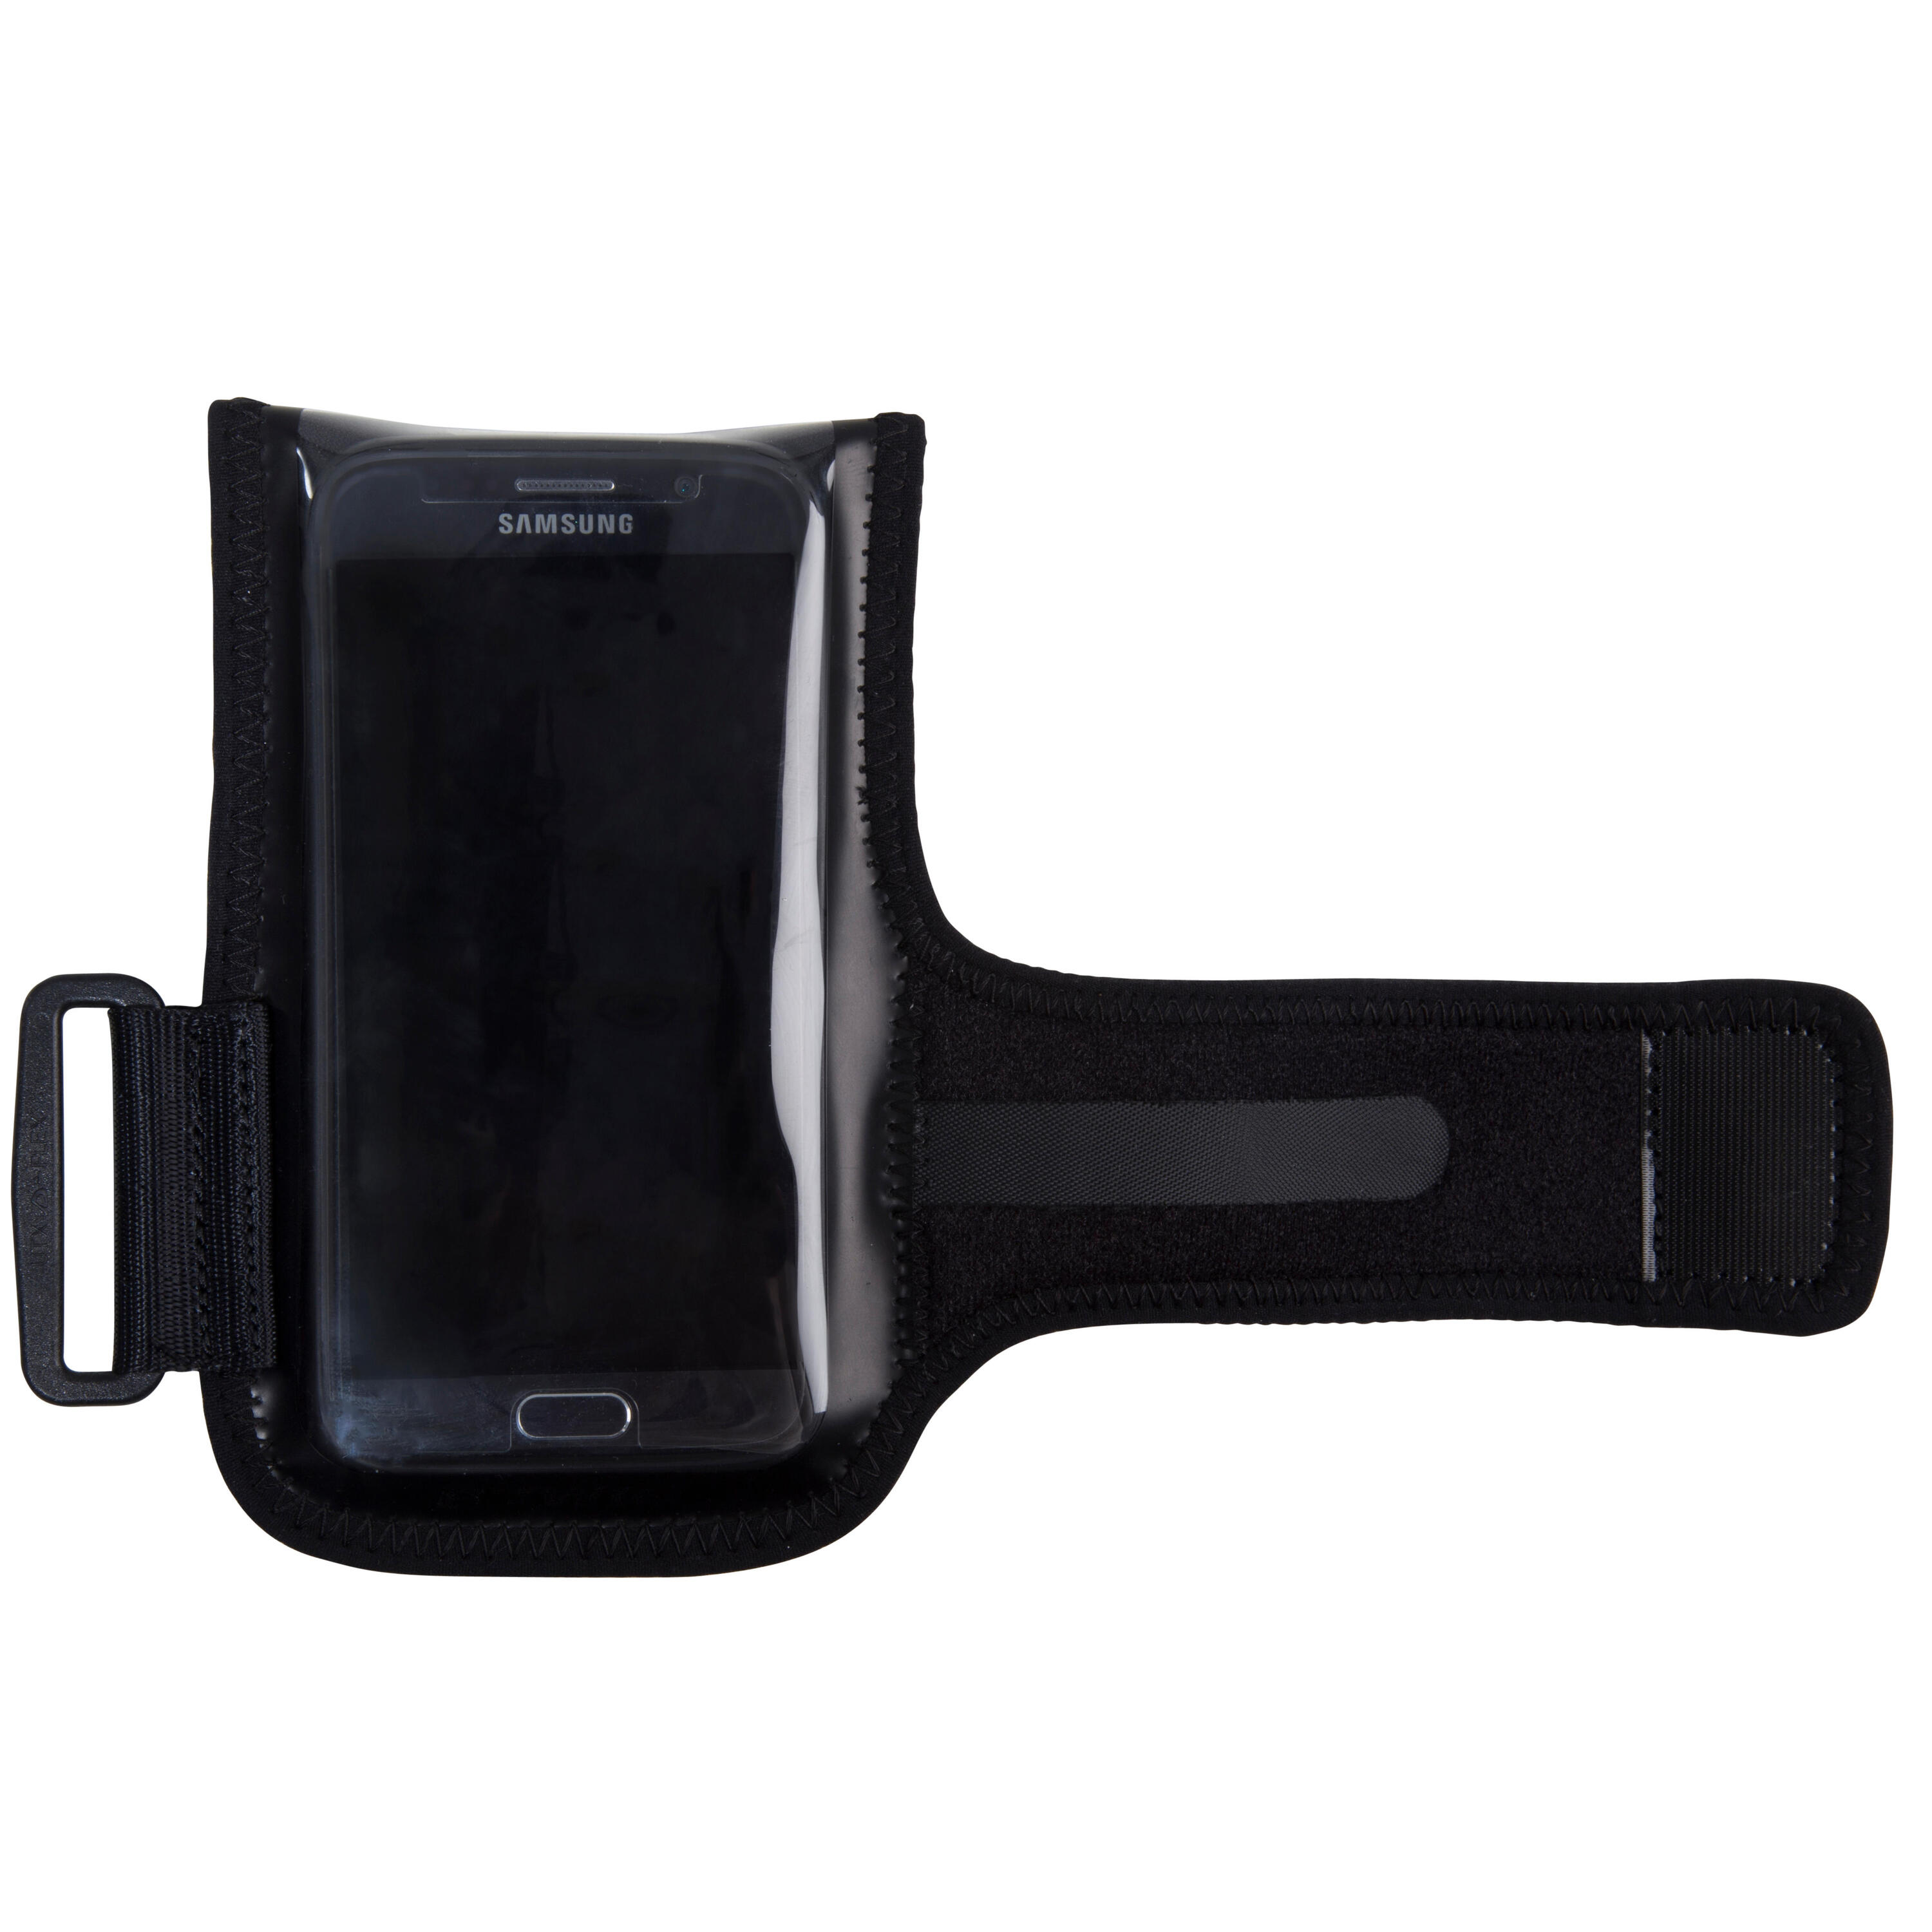 500 Cycling Smartphone Holder - Black 4/7